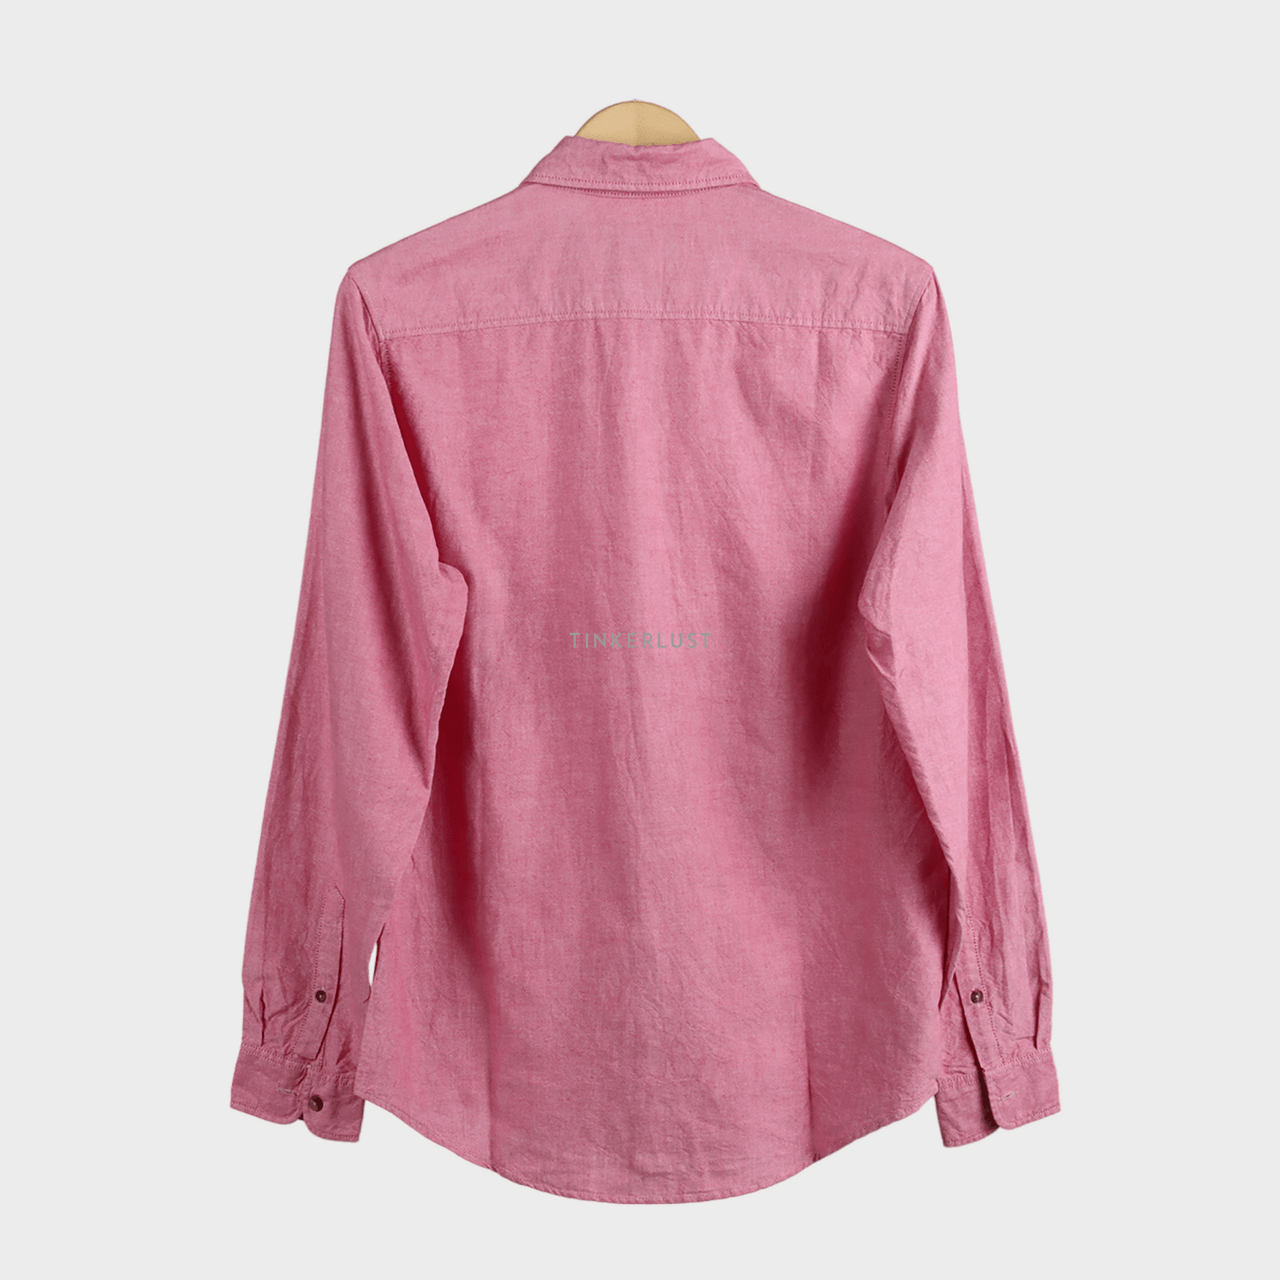 Topman Pink Shirt